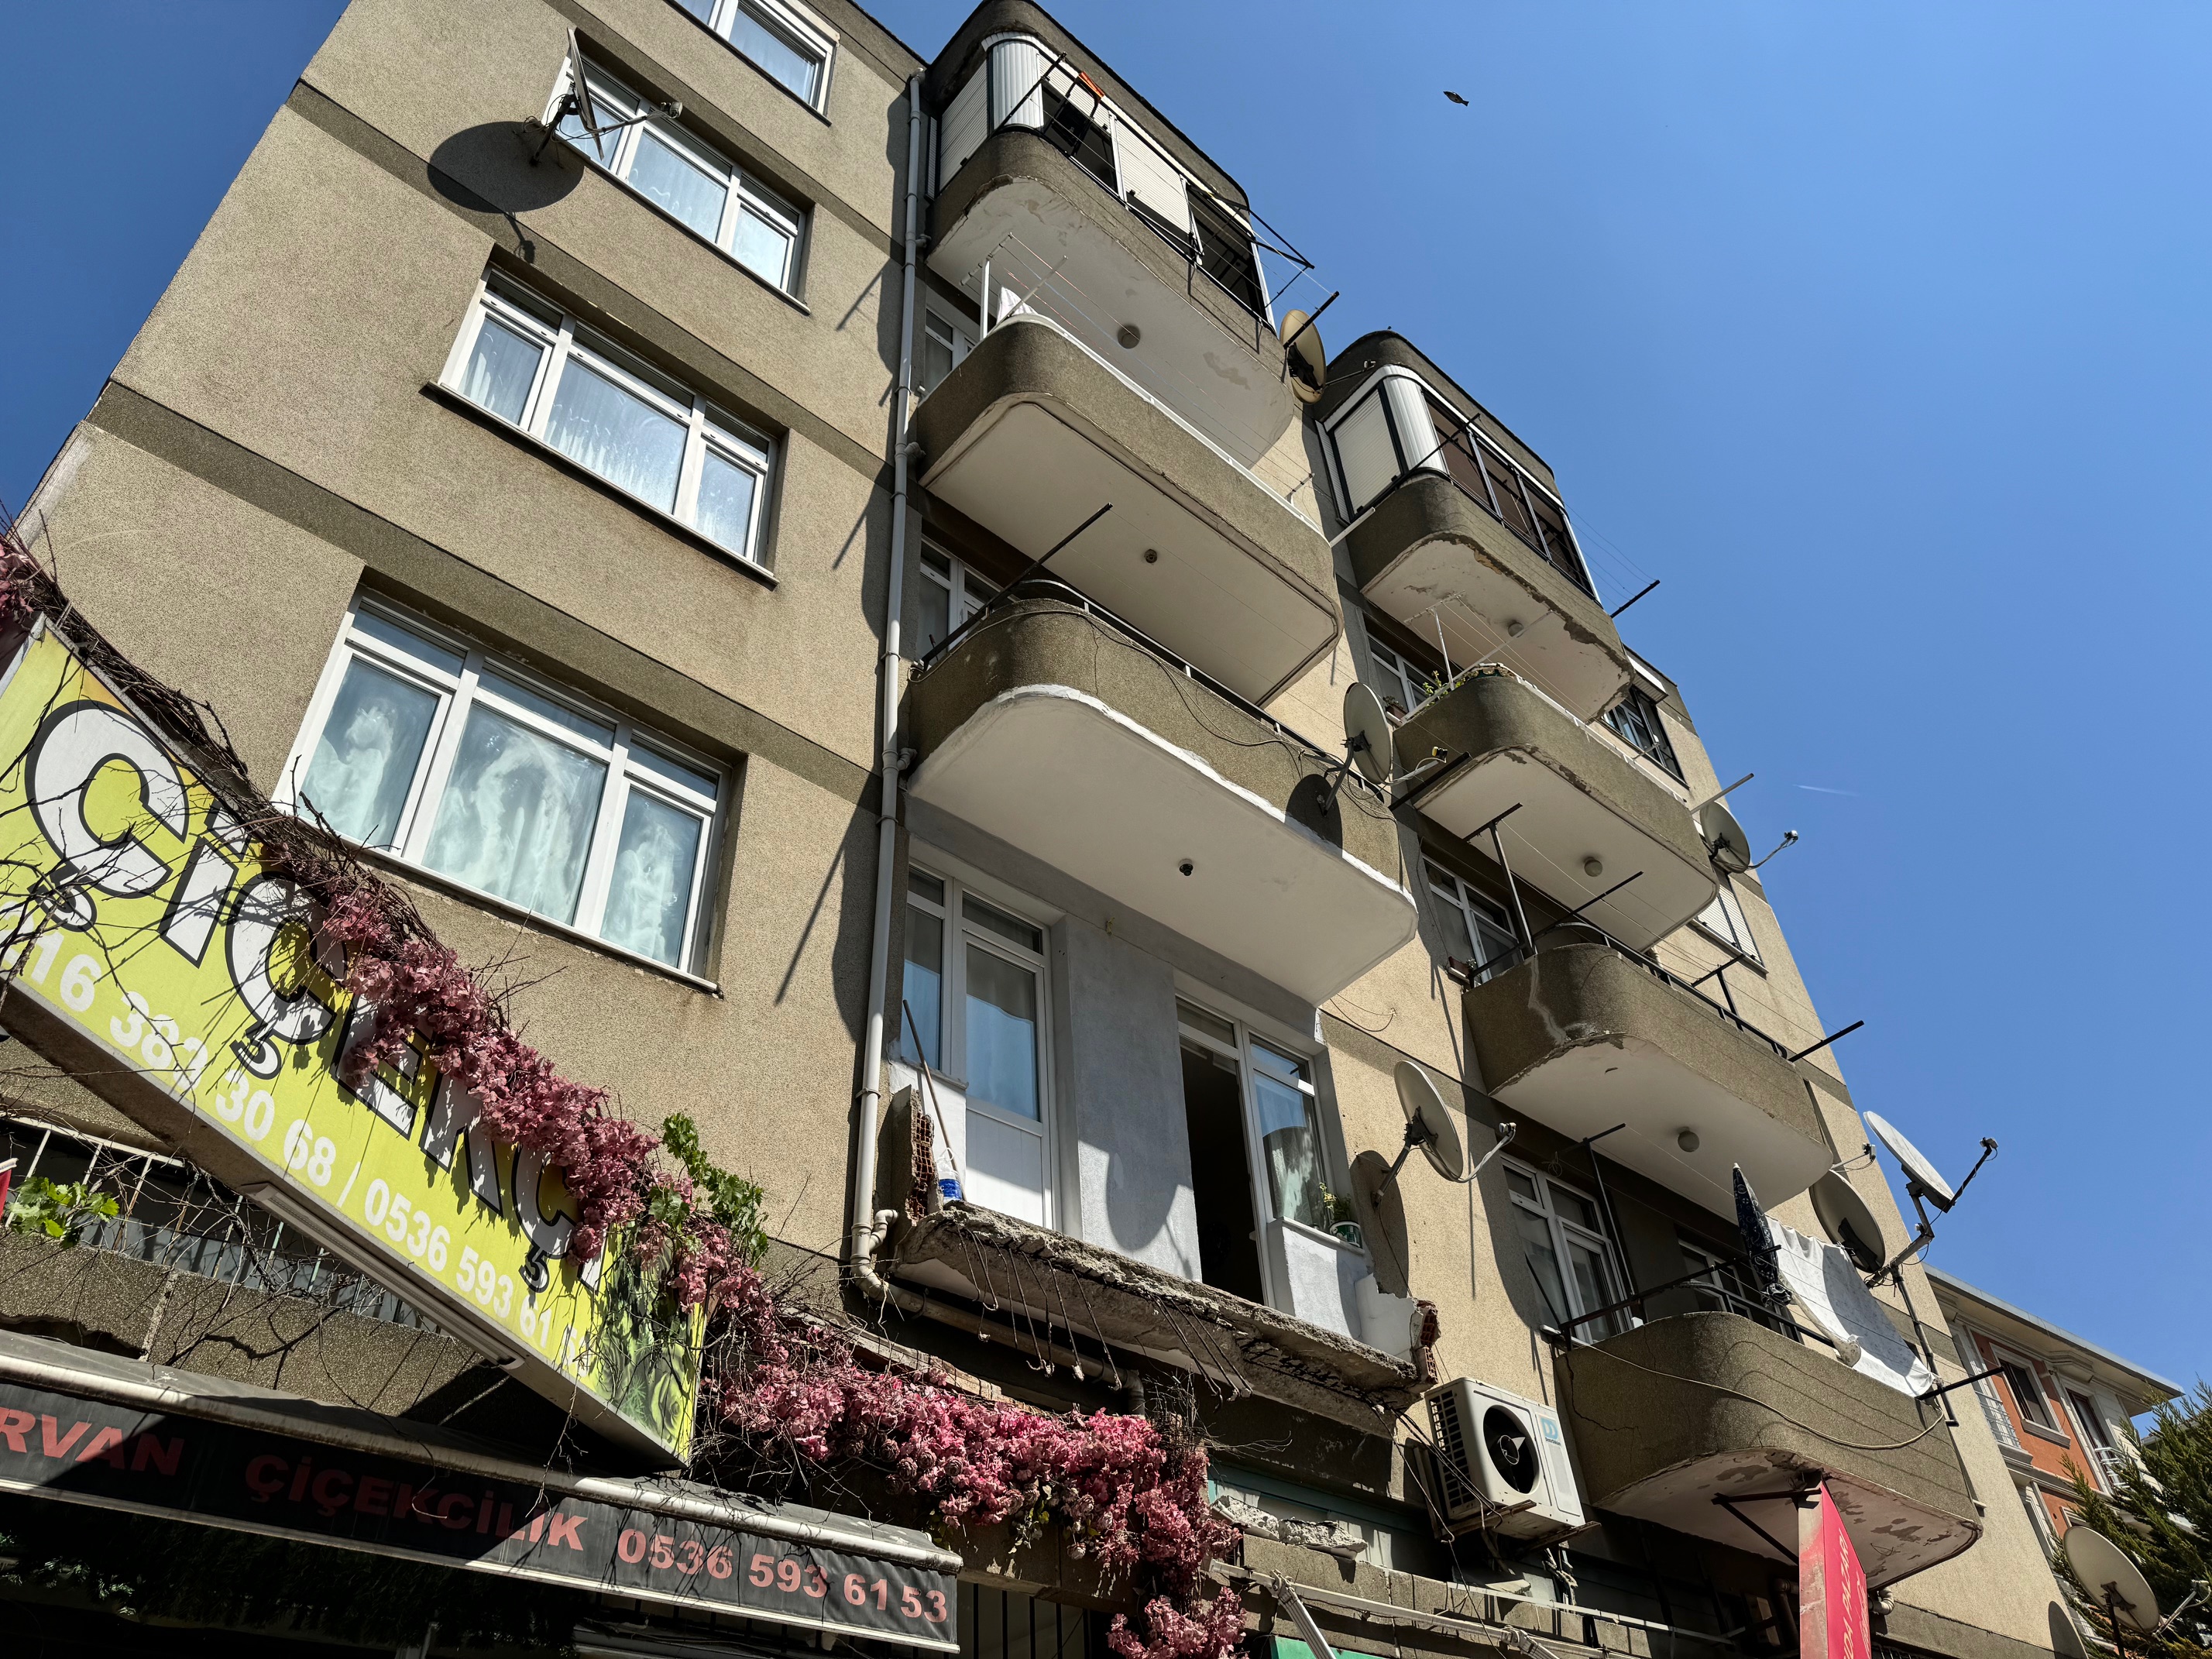 istanbul-kartalda-balkon-coktu-1-kad-38166-5.jpg